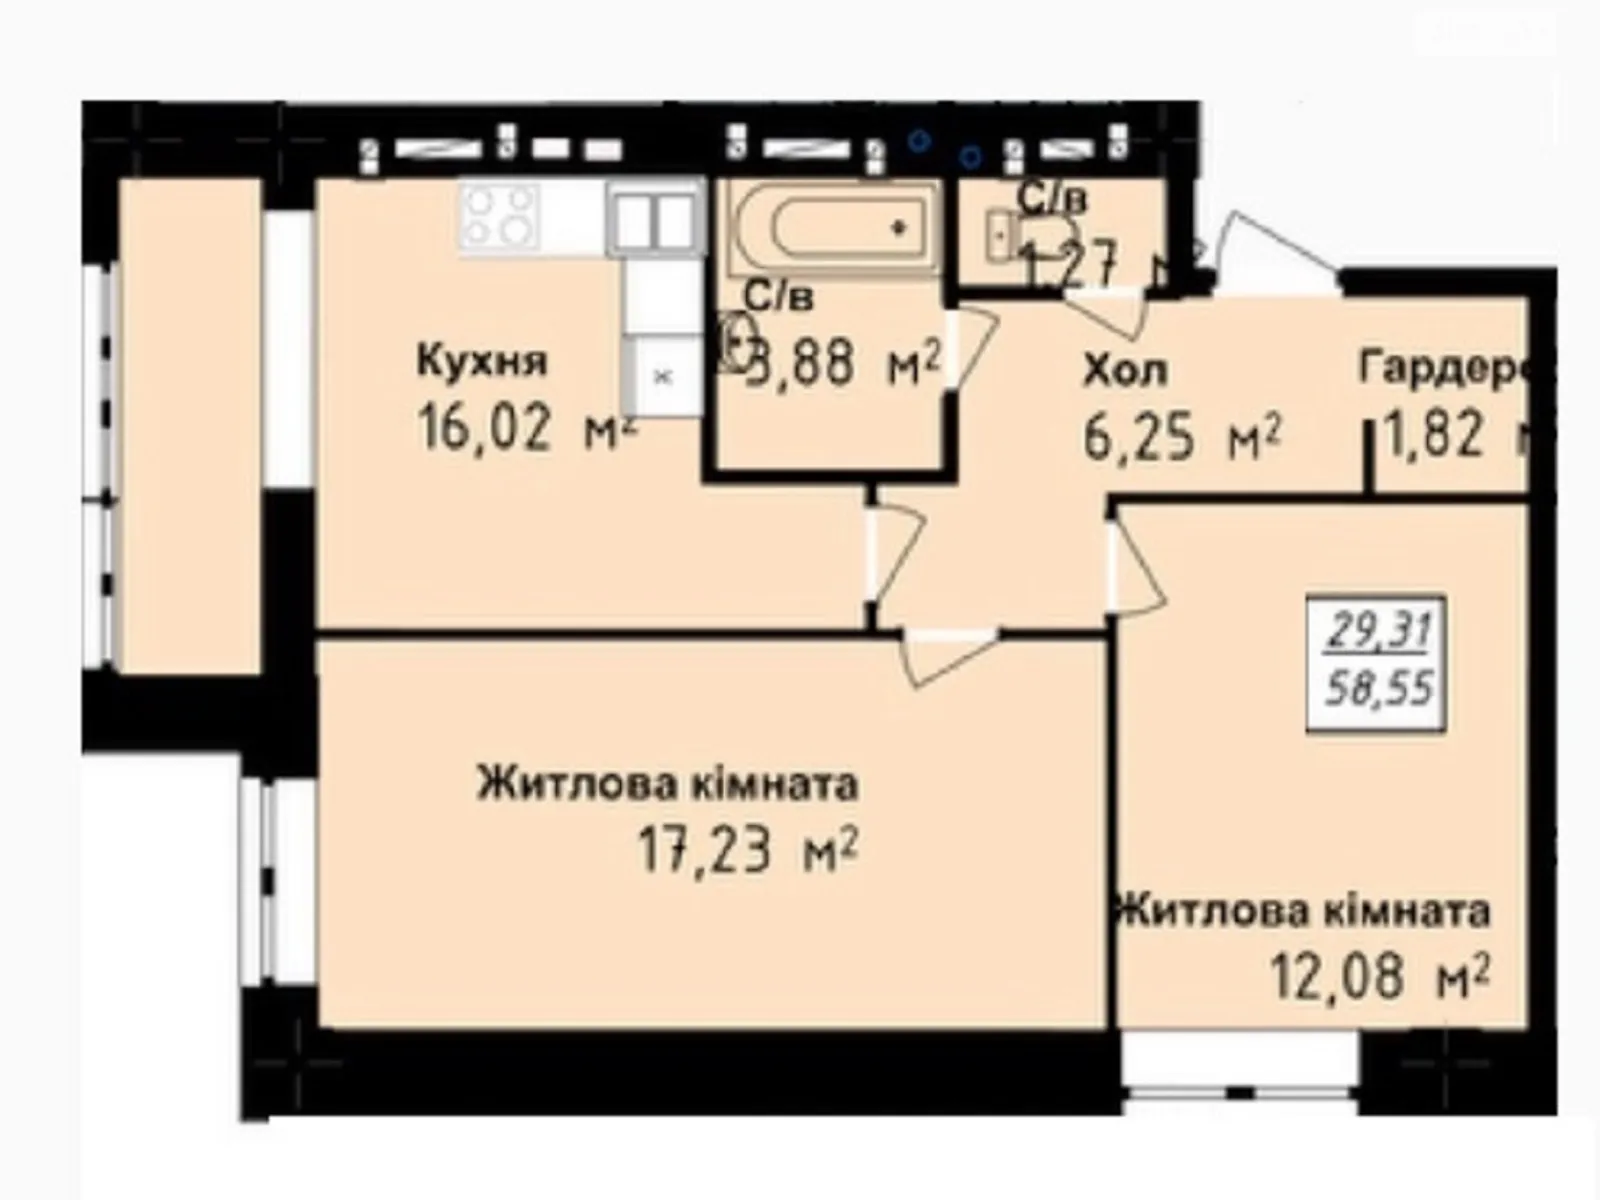 Продается 2-комнатная квартира 58.5 кв. м в Одессе, ул. Академика Сахарова - фото 1